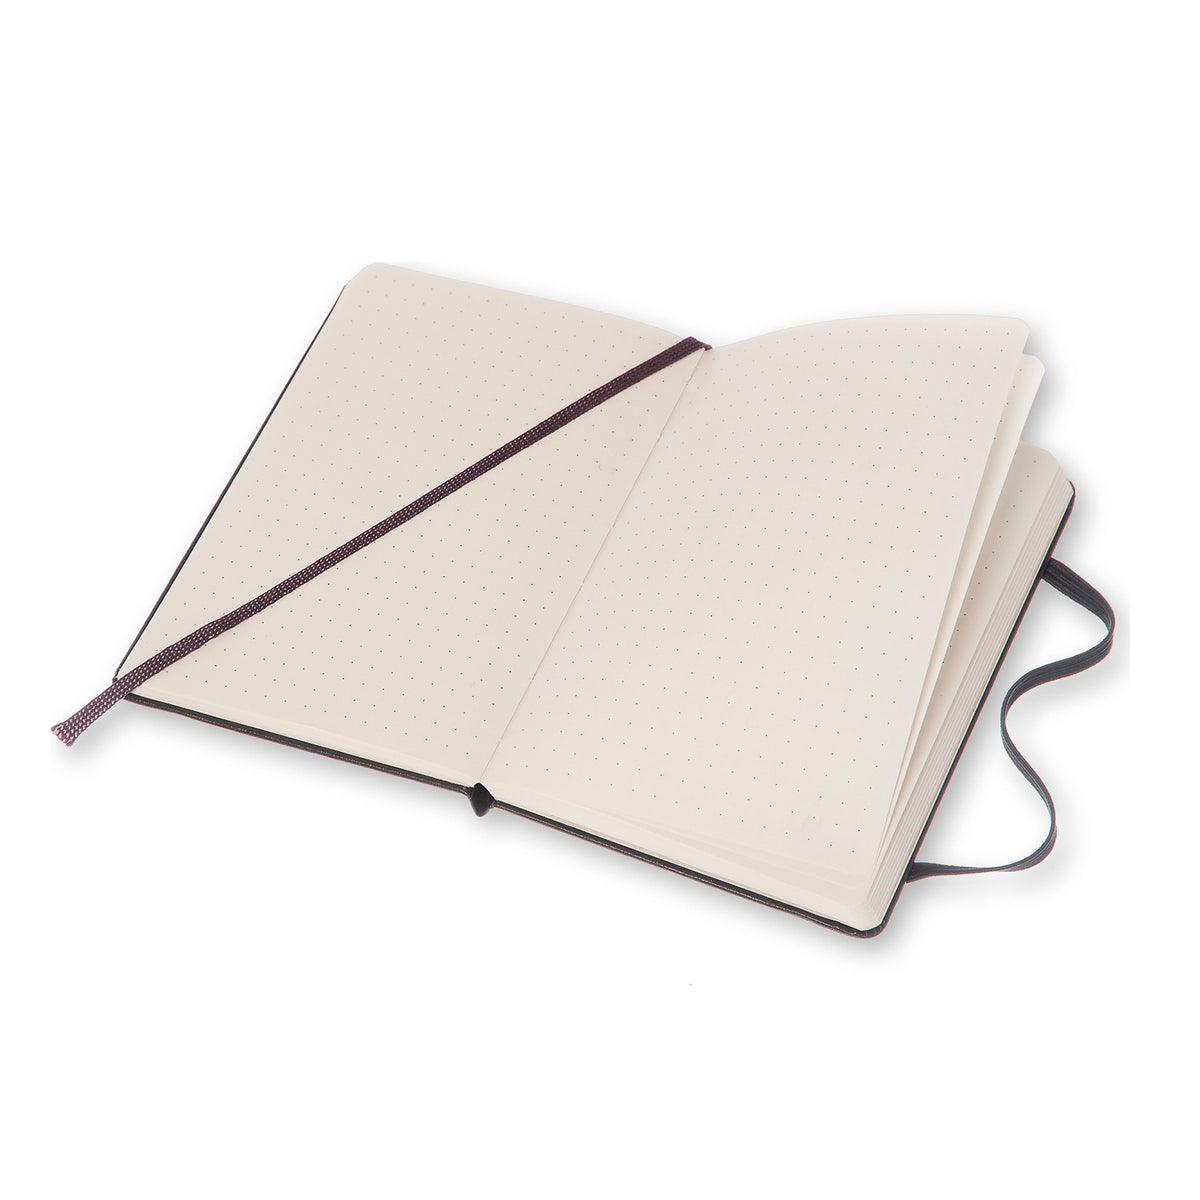 Moleskine - Classic Hard Cover Notebook - Dot Grid - Pocket - Black